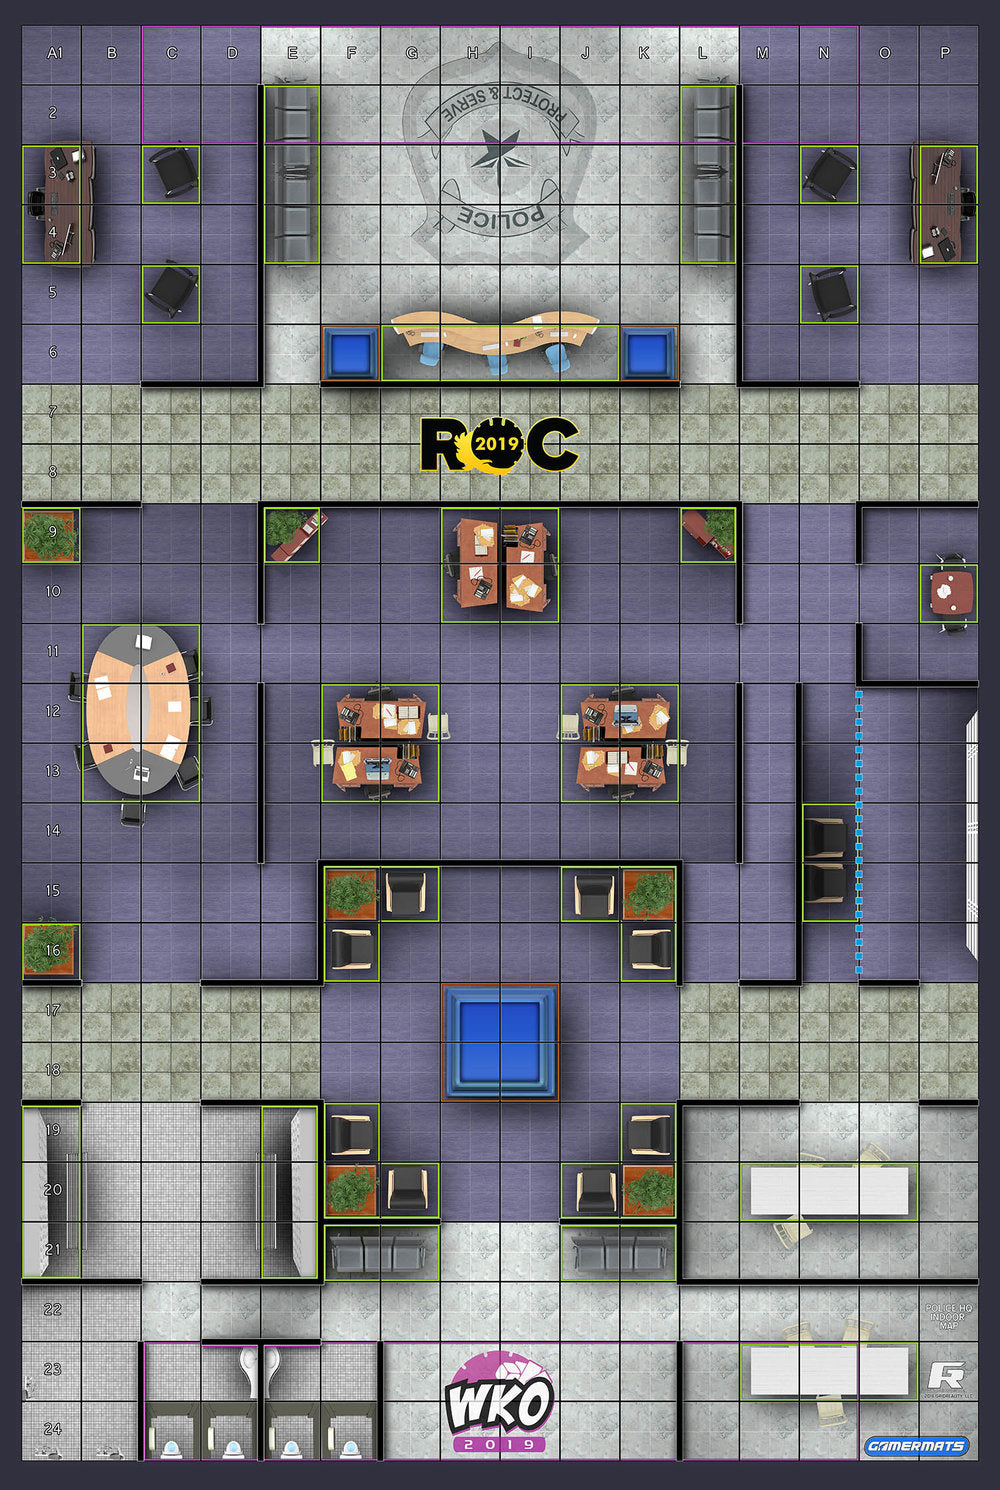 Police Station - ROC/HeroClix Mat Square Corners - 36" x 24" x 1/16"